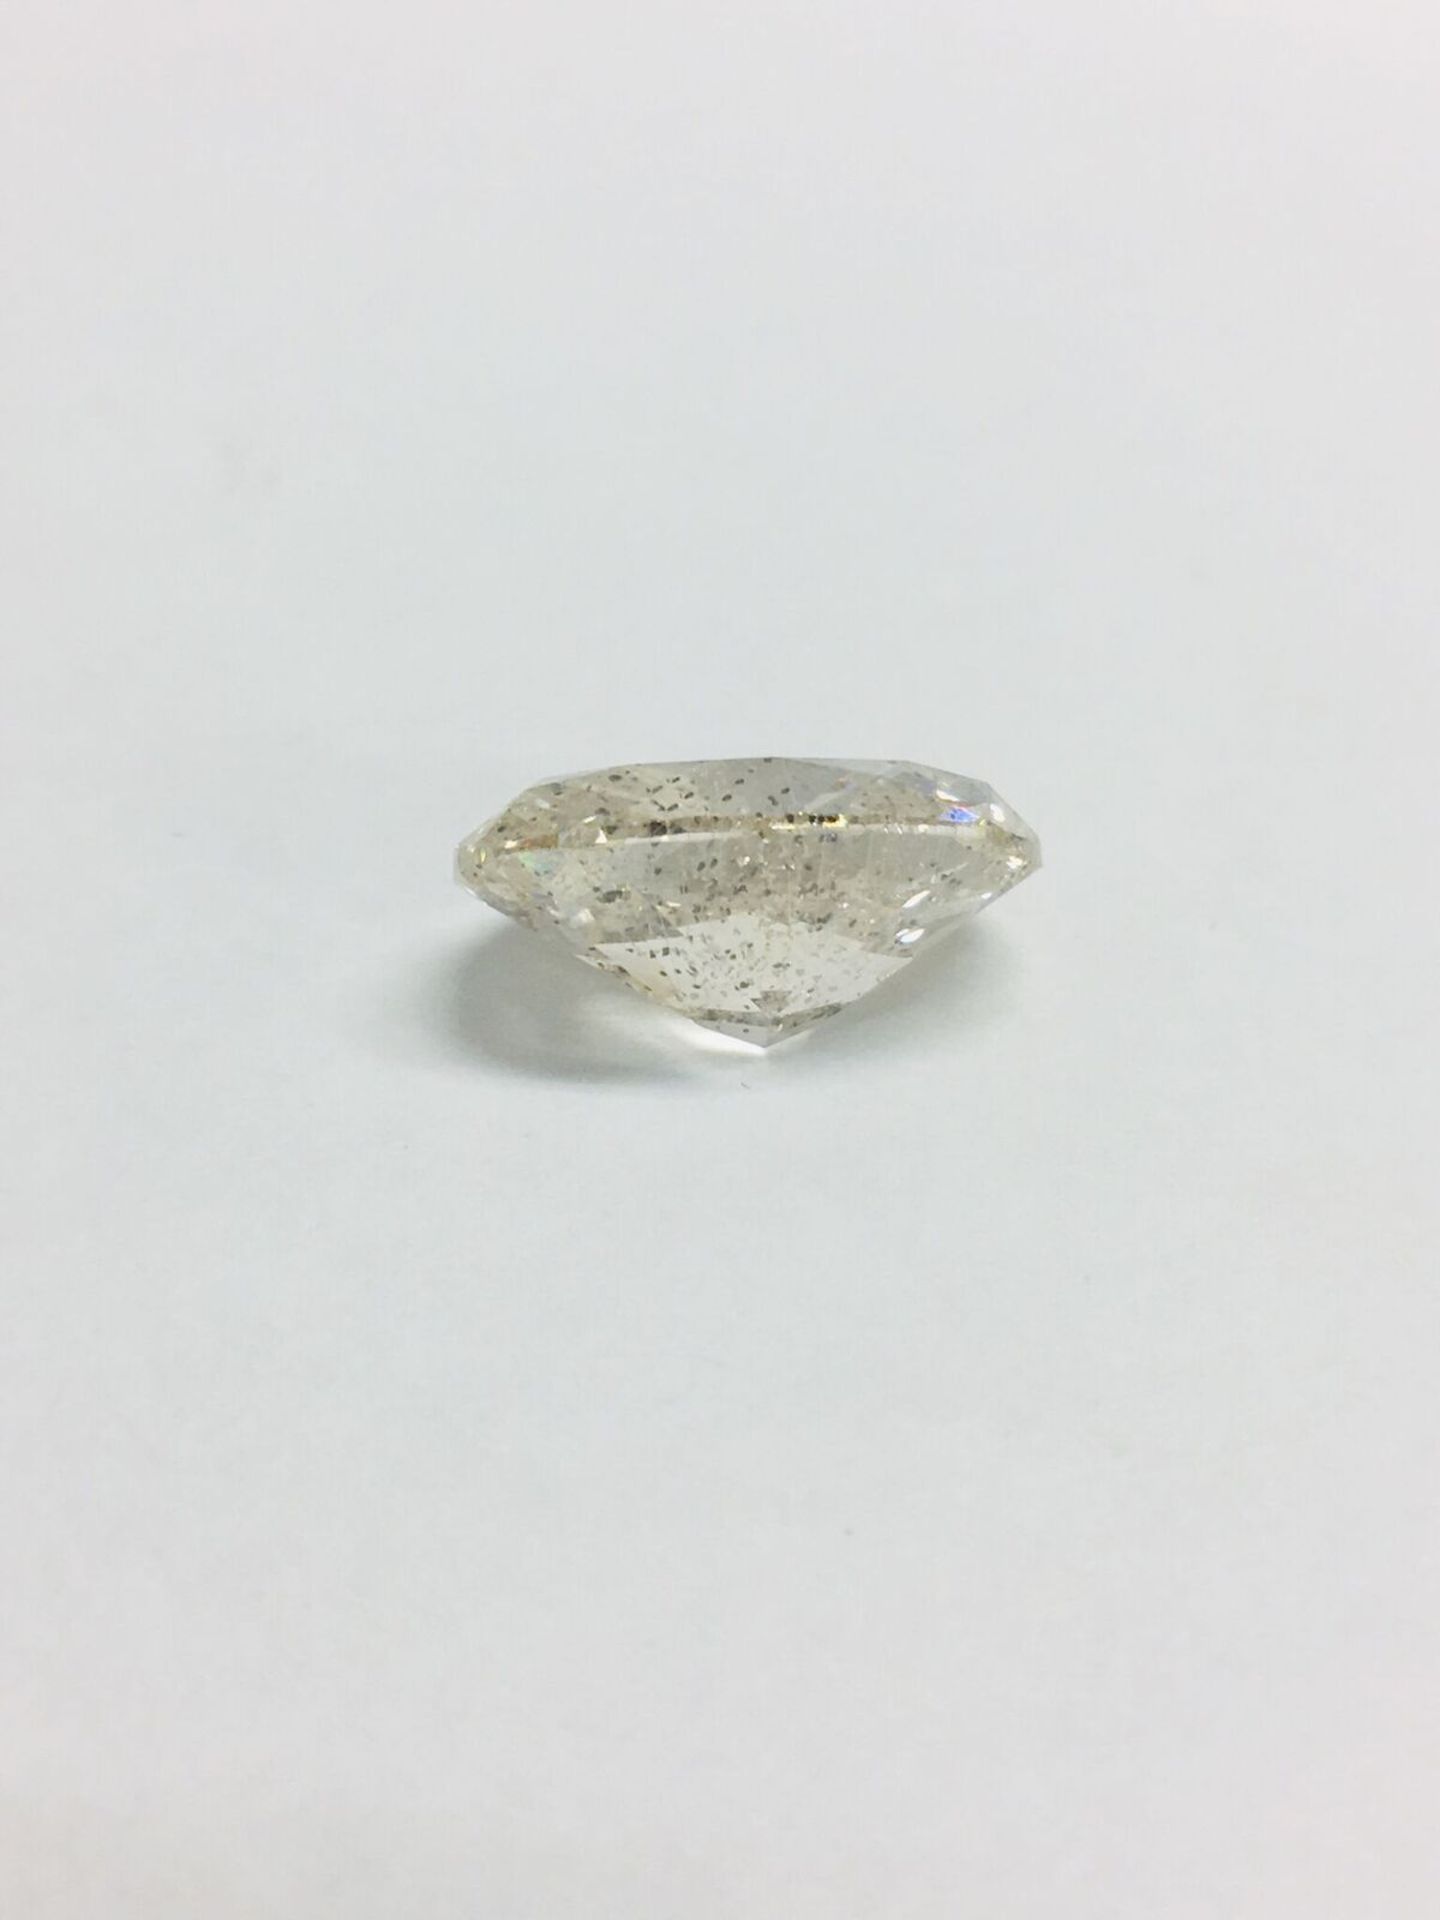 5.54ct Oval Natural Diamond - Image 3 of 4